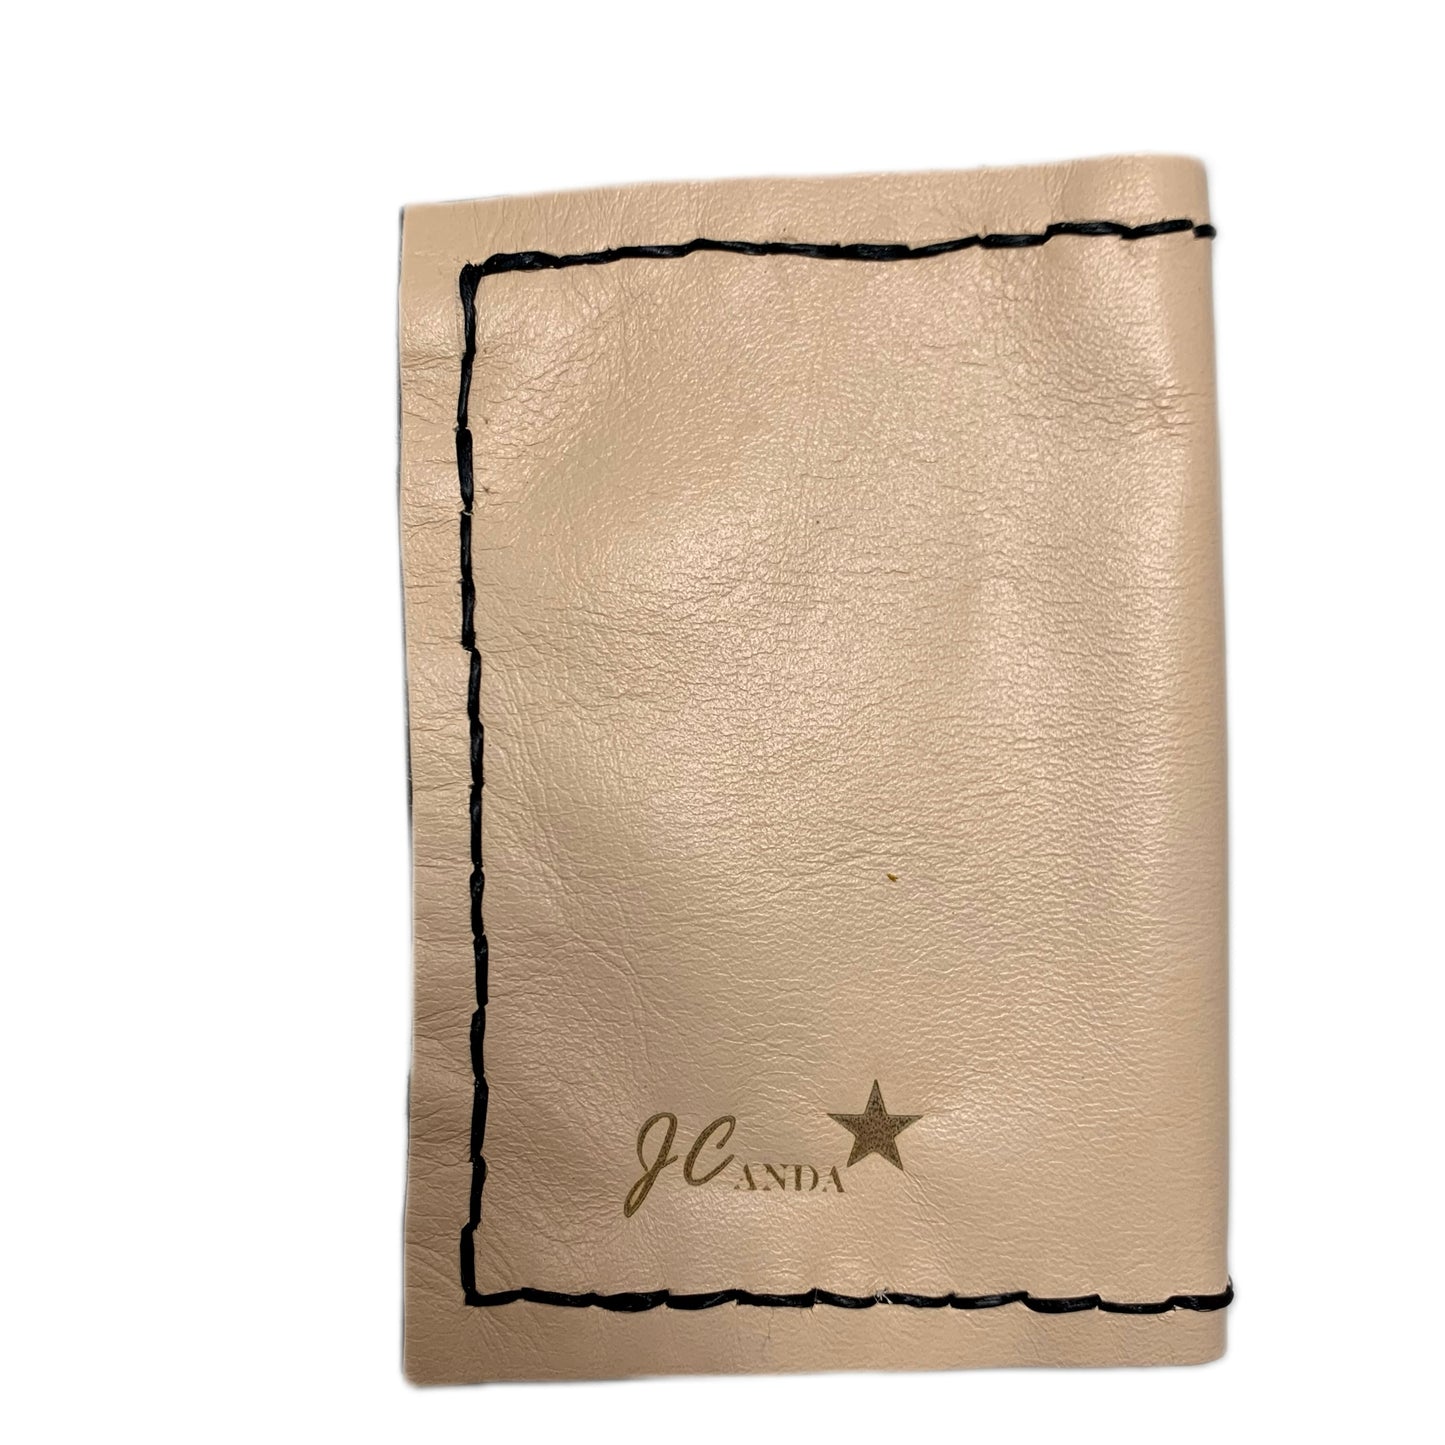 JCAnda Leather Wallet: Royalties